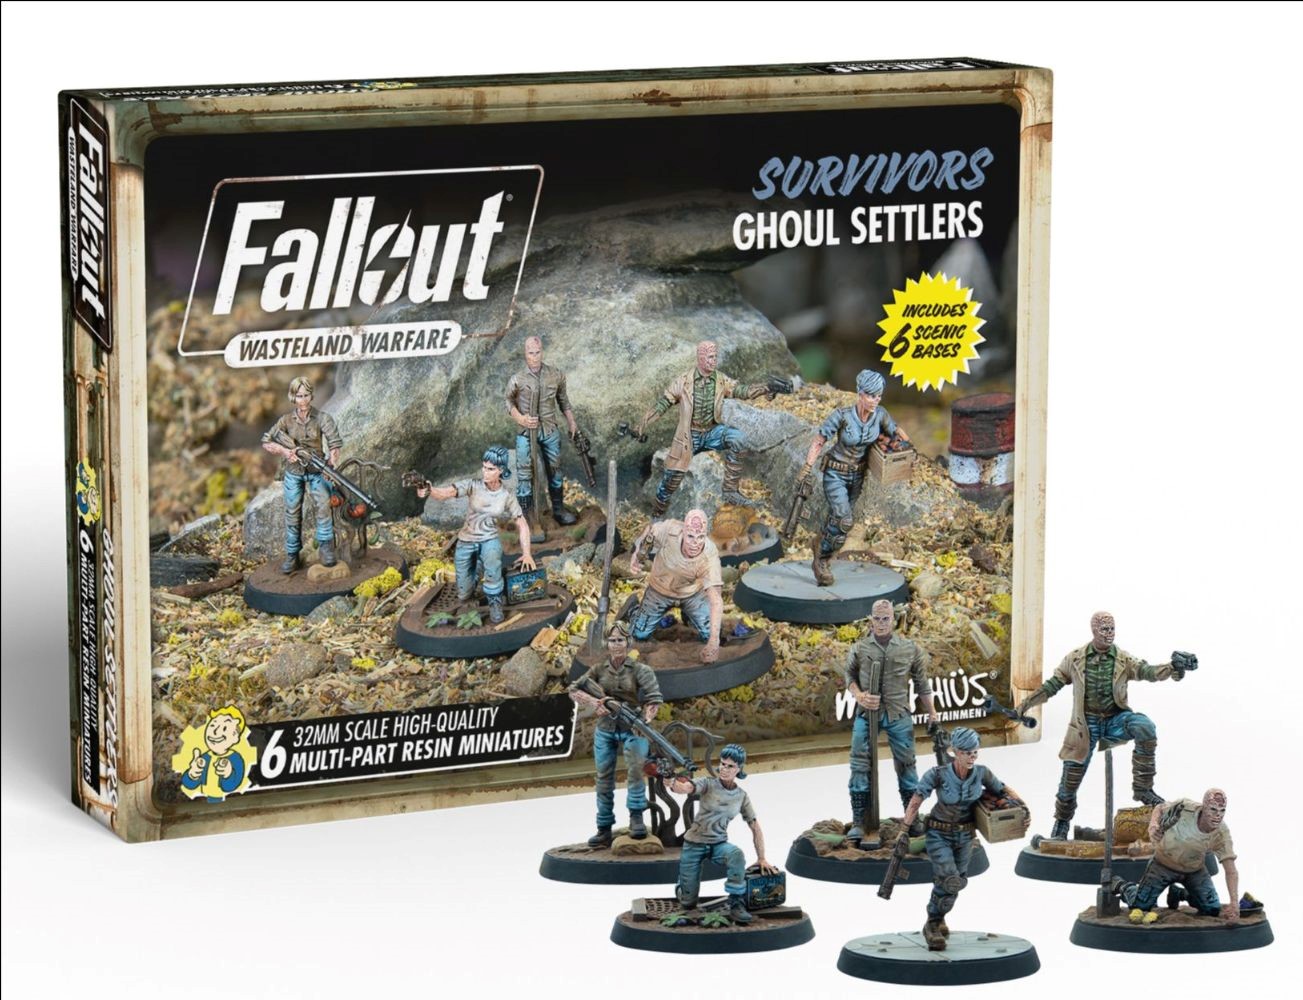 Fallout: Wasteland Warfare: SURVIVOR GHOUL SETTLERS 